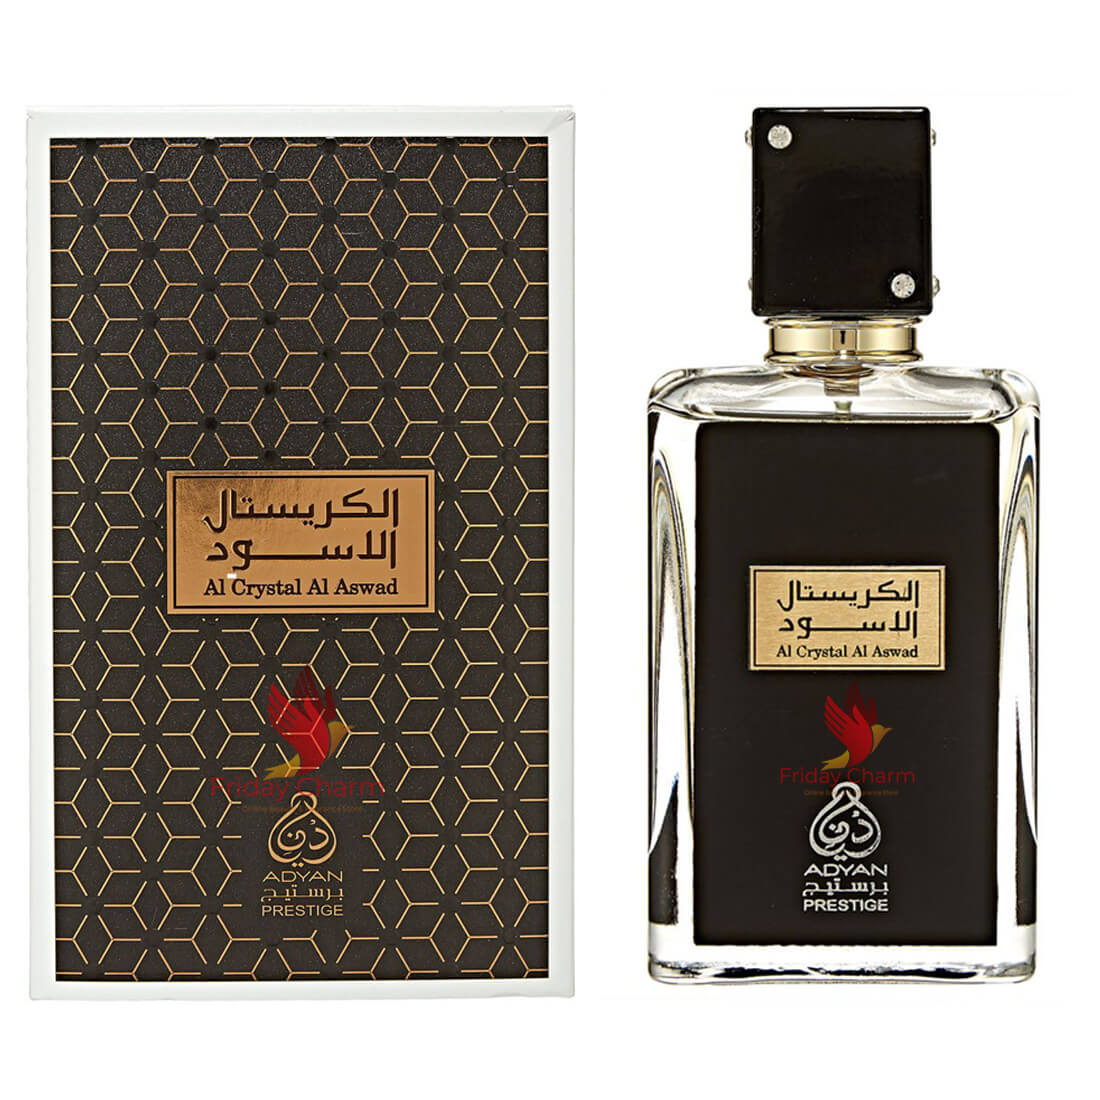 Adyan Al Crystal Al Aswad Perfume Spray 